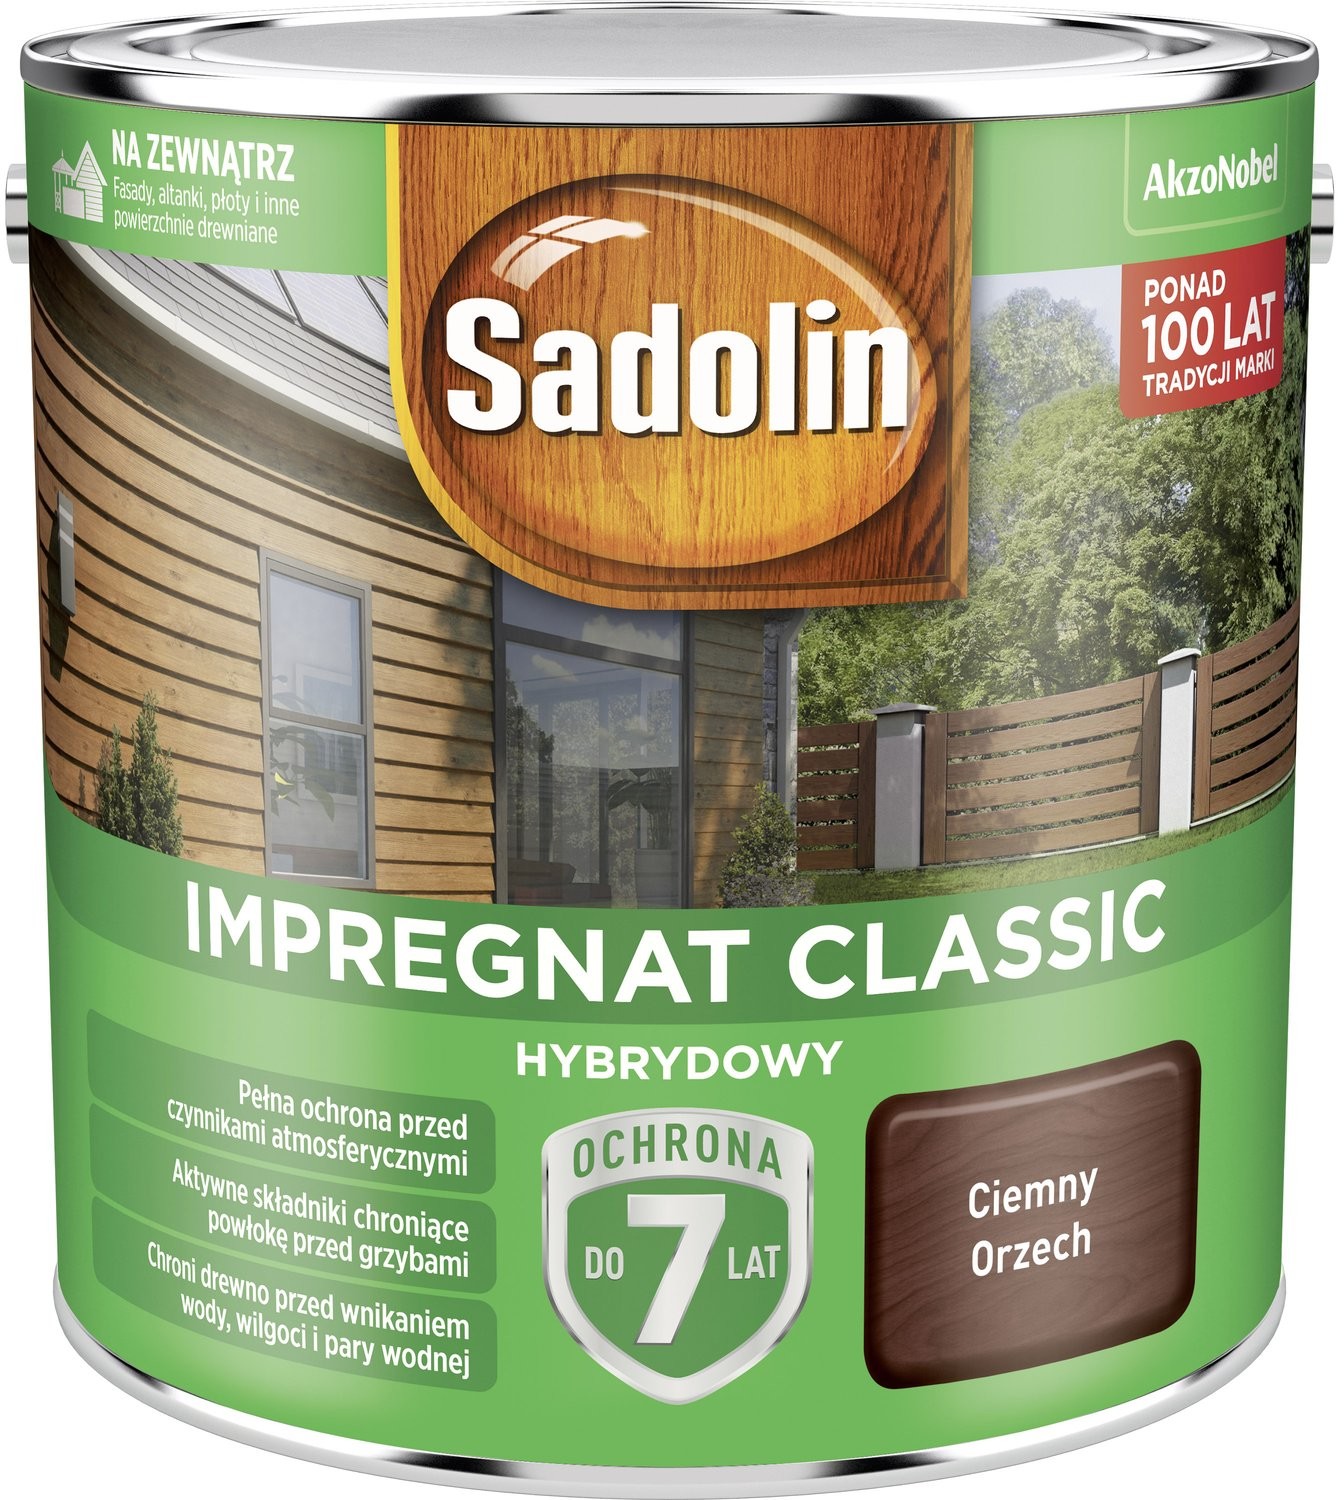 Sadolin Impregnat Classic ciemny orzech 2,5 l